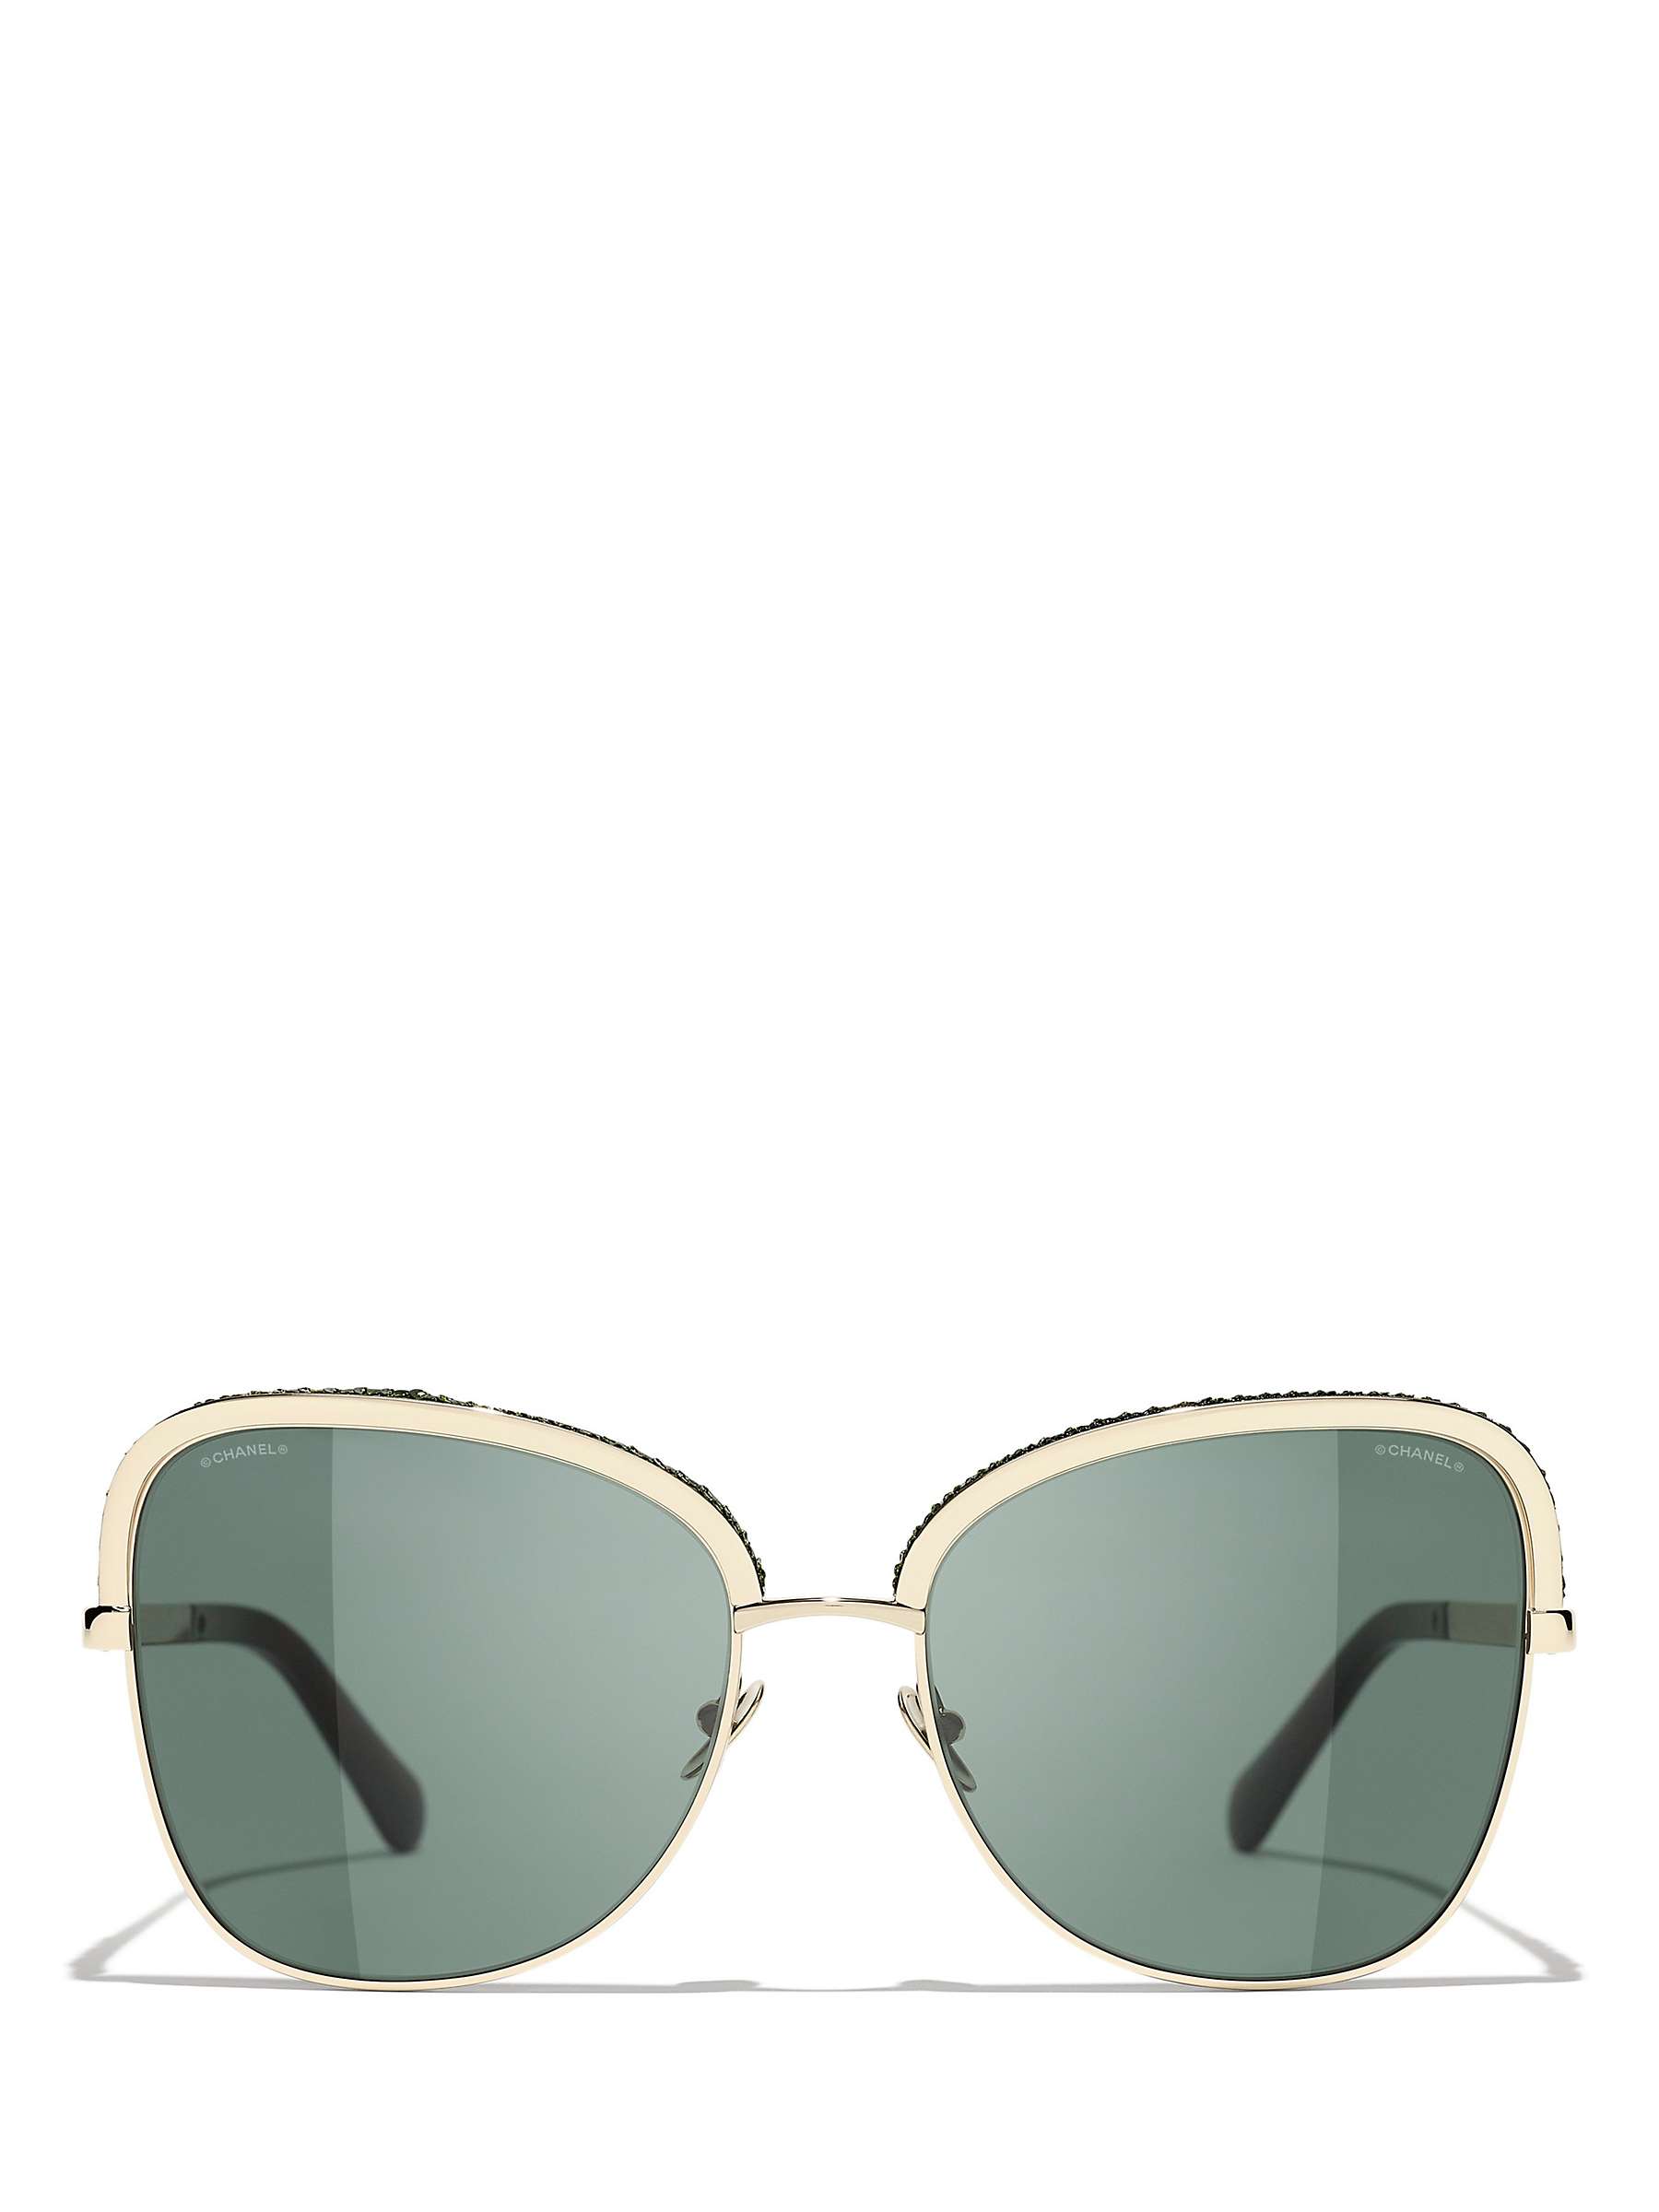 Buy CHANEL Irregular Sunglasses CH4270 Shiny Gold/Green Online at johnlewis.com